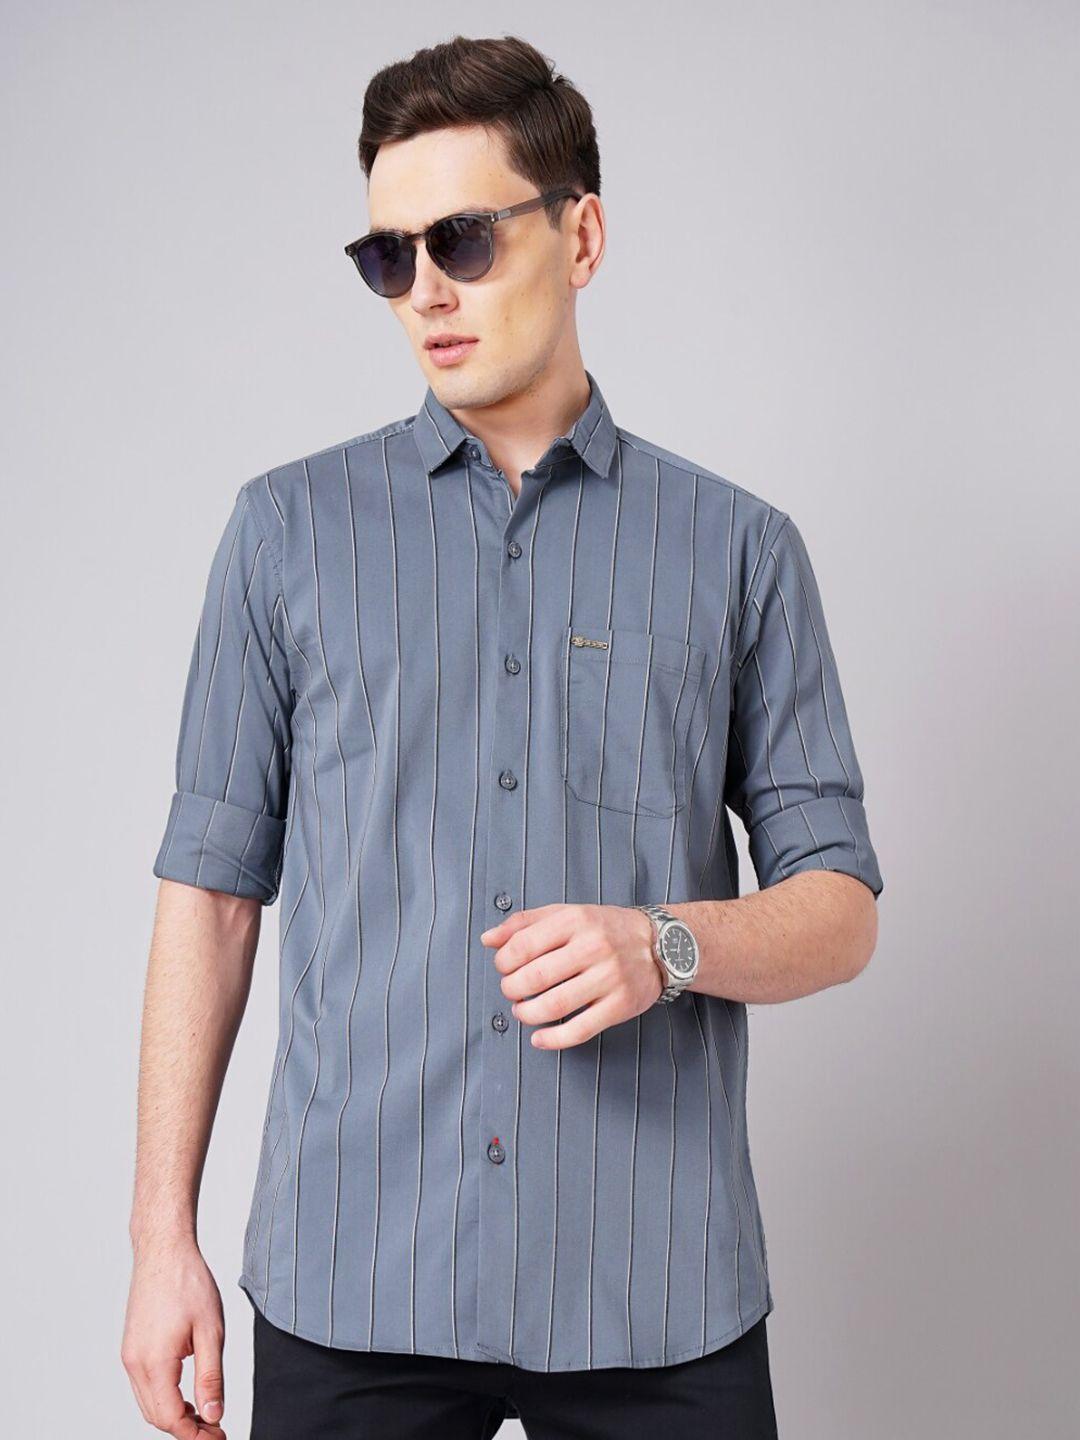 paul street standard striped slim fit opaque casual shirt